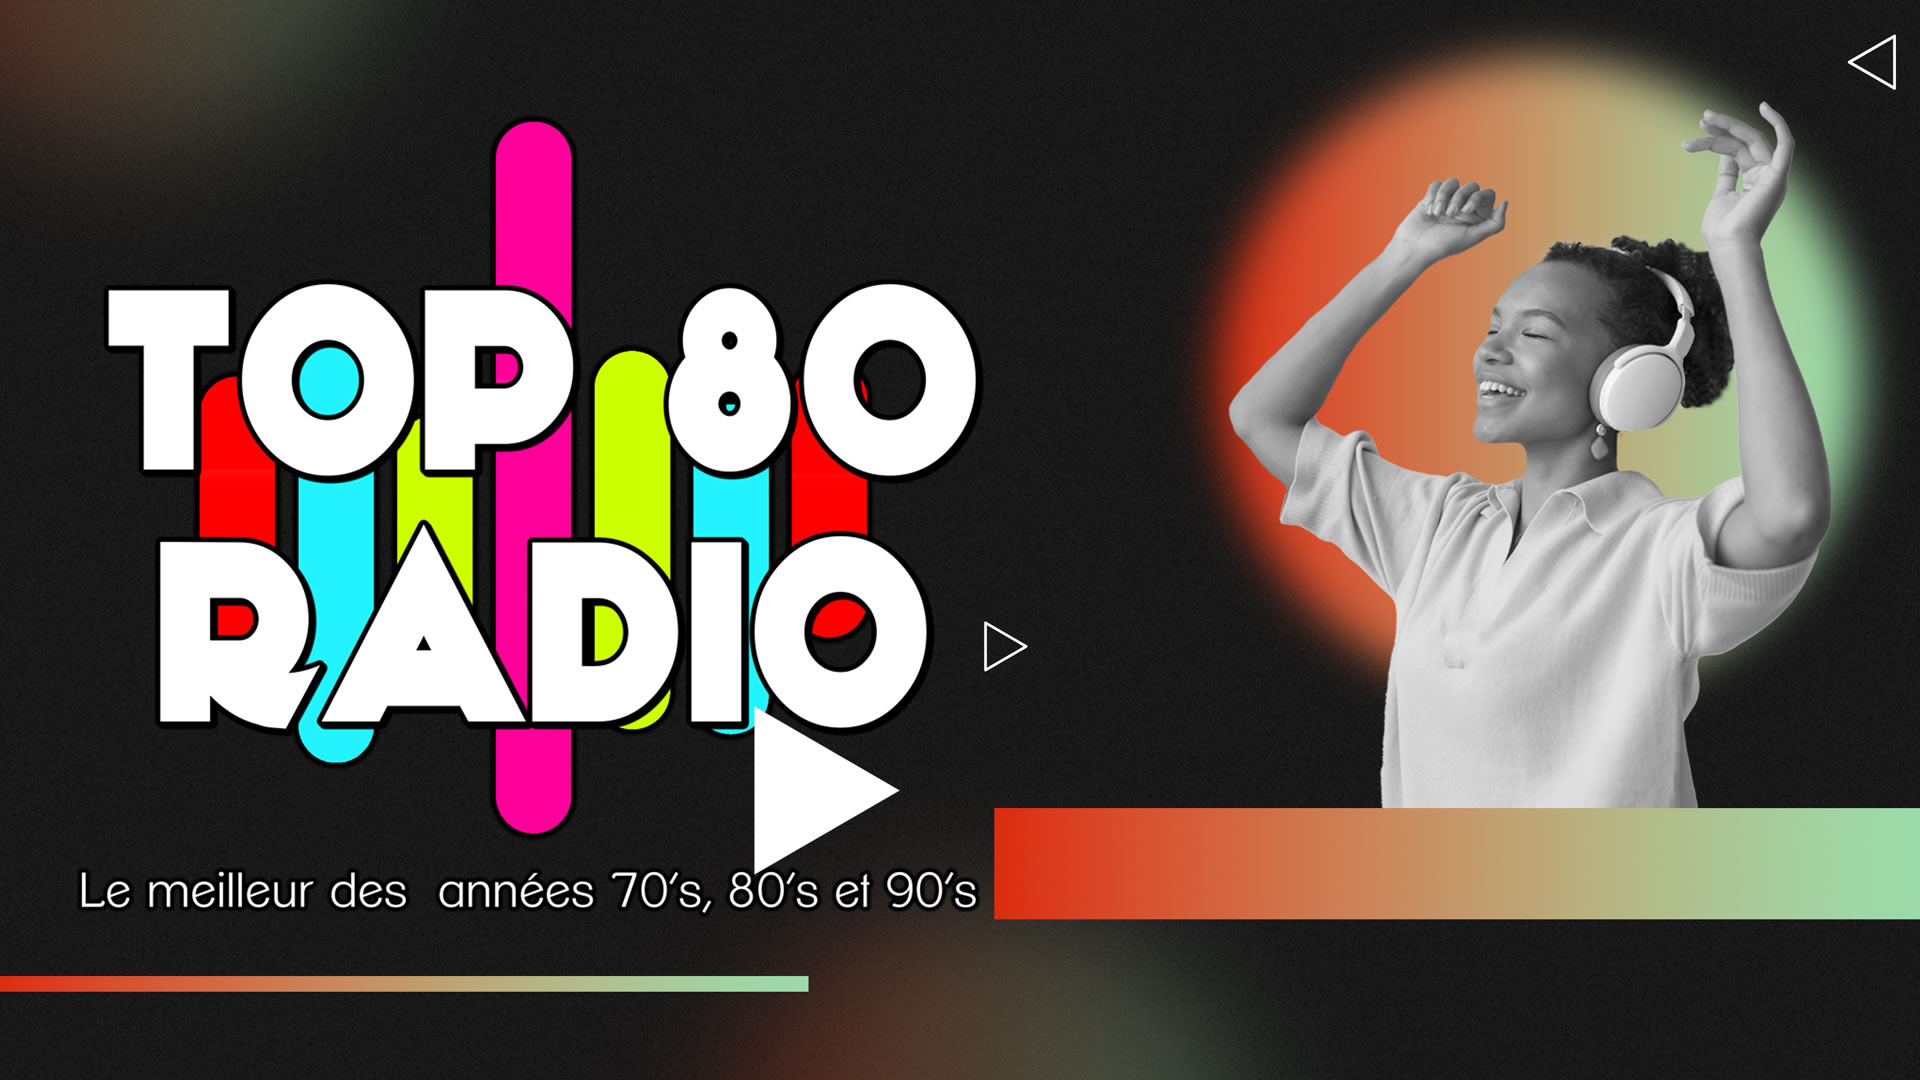 WALLPAPER–TOP-80-RADIO—53